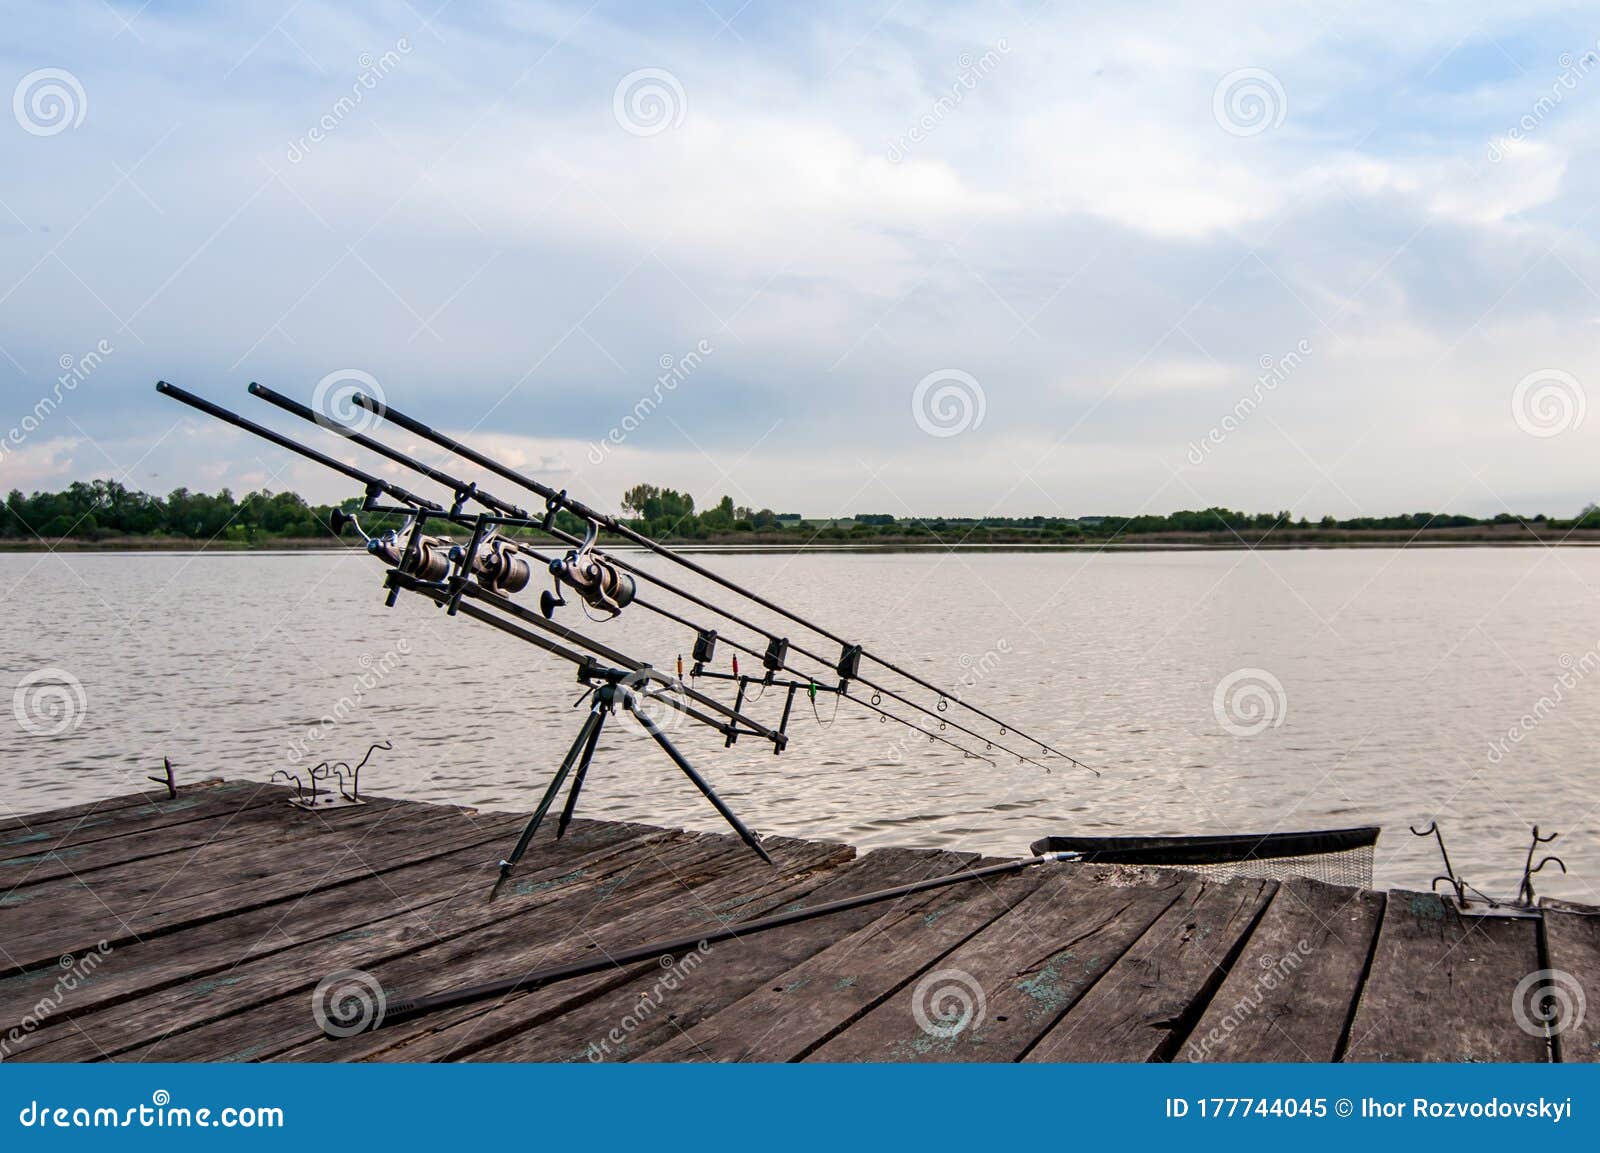 Fishing Adventures, Carp Fishing at Dawn. Professional Fishing